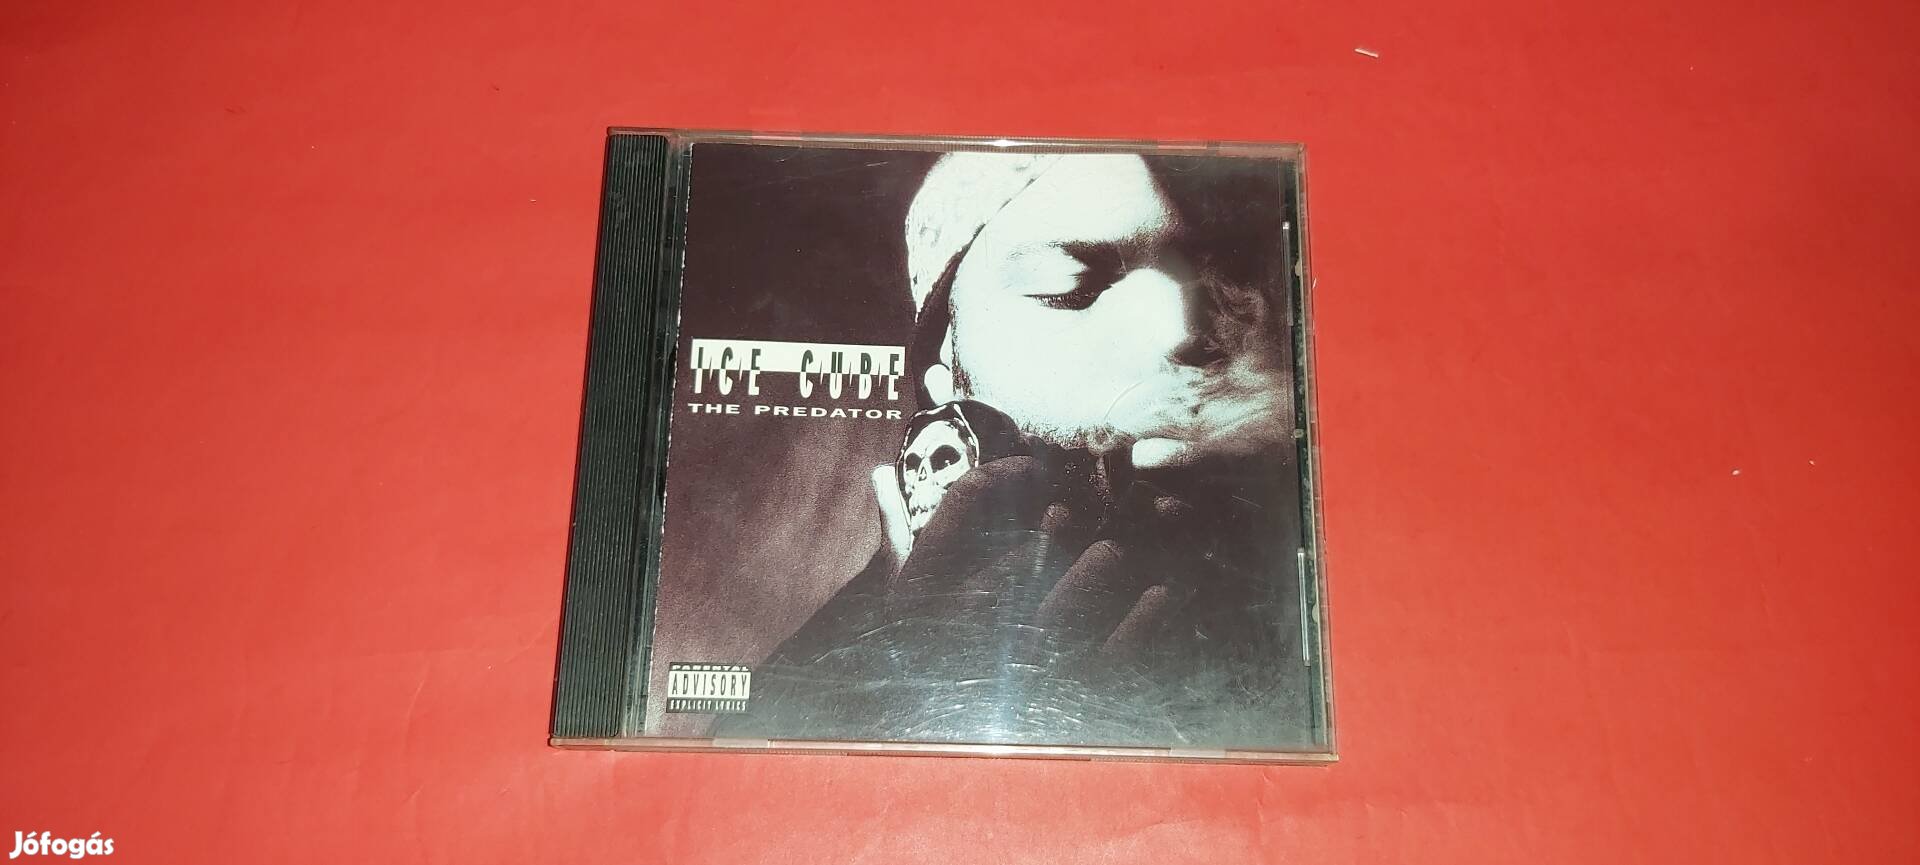 Ice Cube The predator Cd 1992 U.S.A.